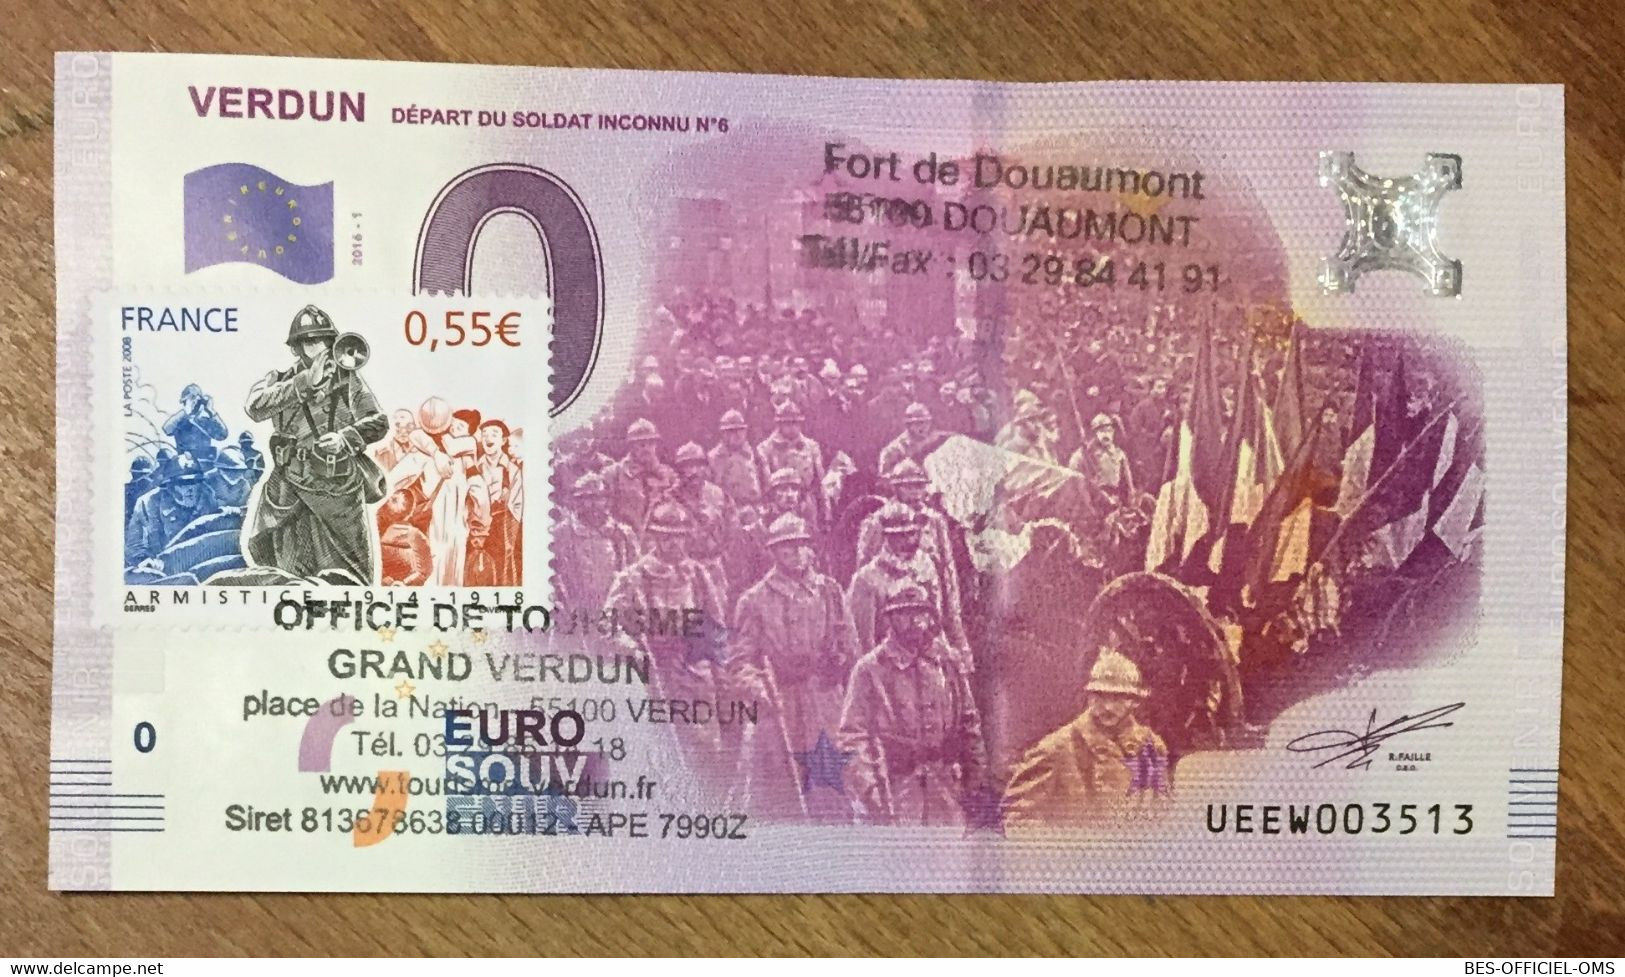 2016 BILLET 0 EURO SOUVENIR DPT 55 VERDUN SOLDAT INCONNU + TIMBRE ZERO 0 EURO SCHEIN BANKNOTE PAPER MONEY BANK - Privatentwürfe